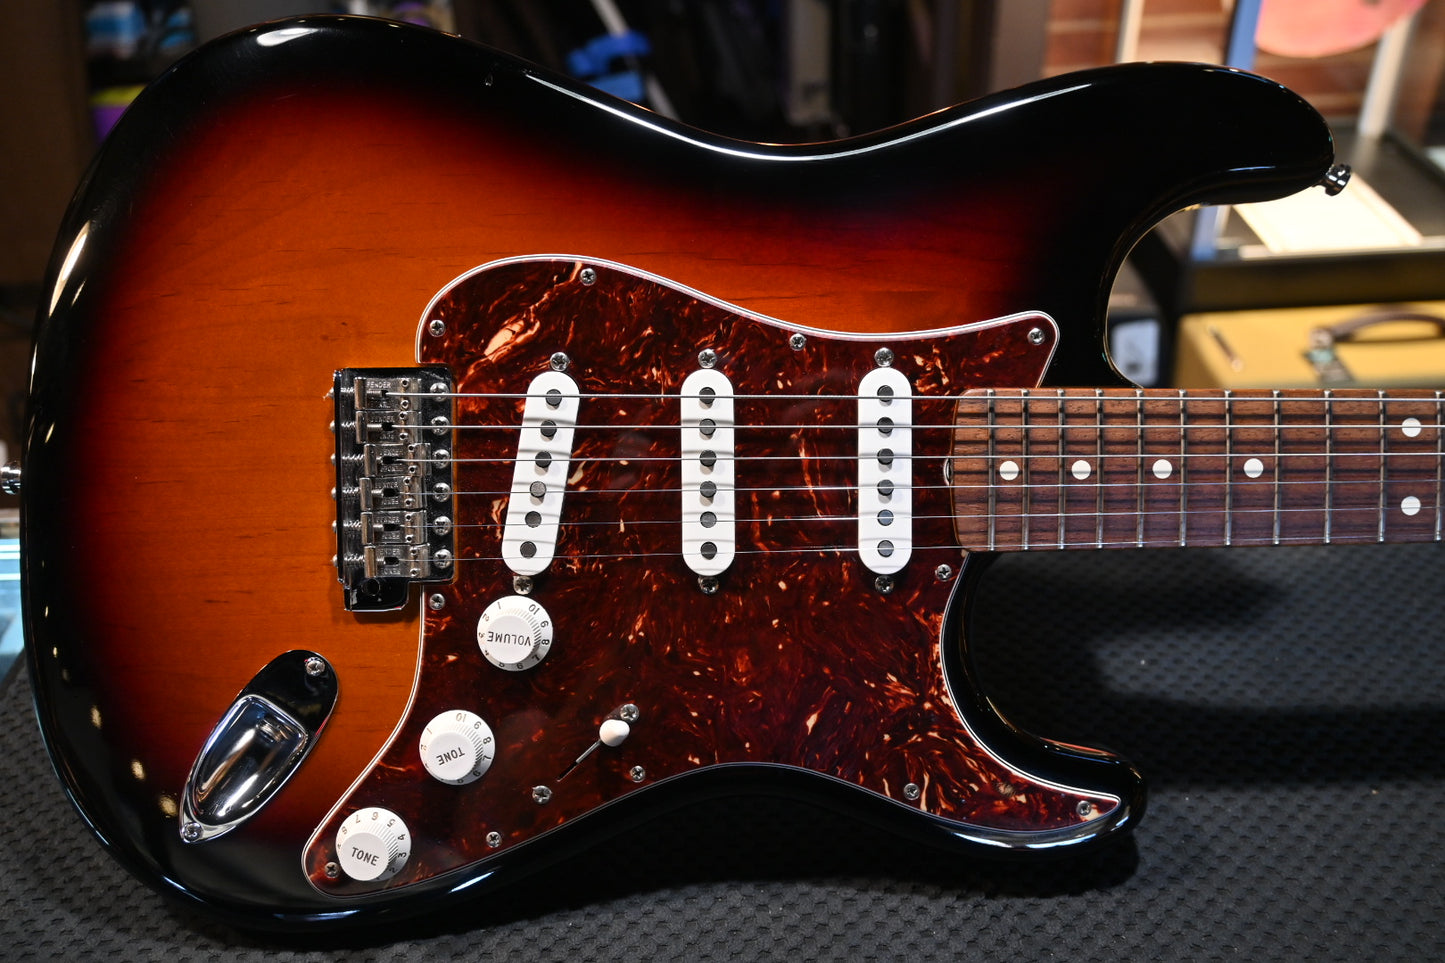 Fender John Mayer Signature Stratocaster 2013 - Tobacco Burst Guitar #1992 - Danville Music